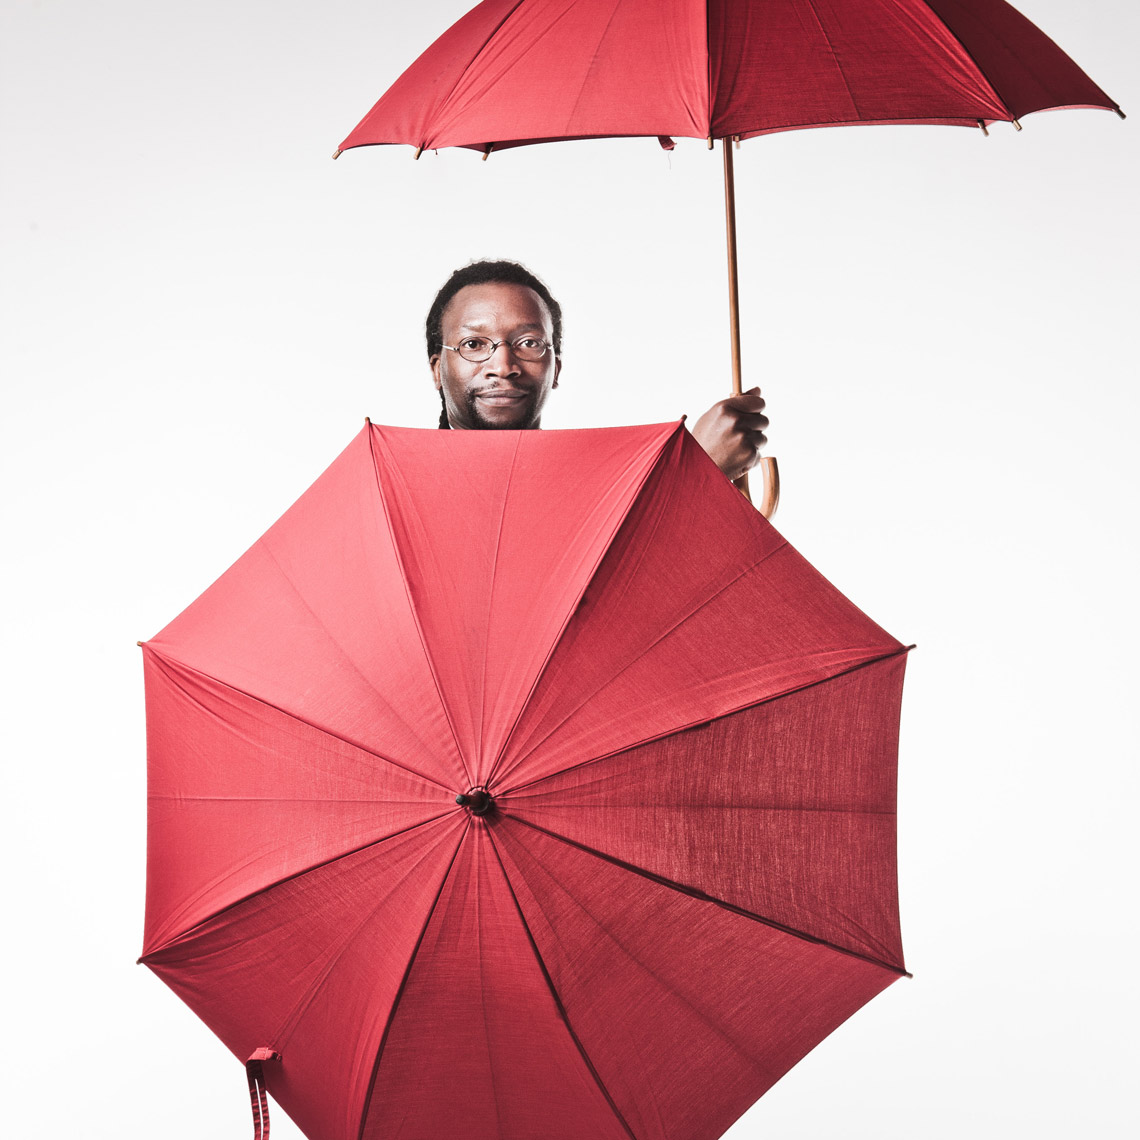 Black man with red umbrellas